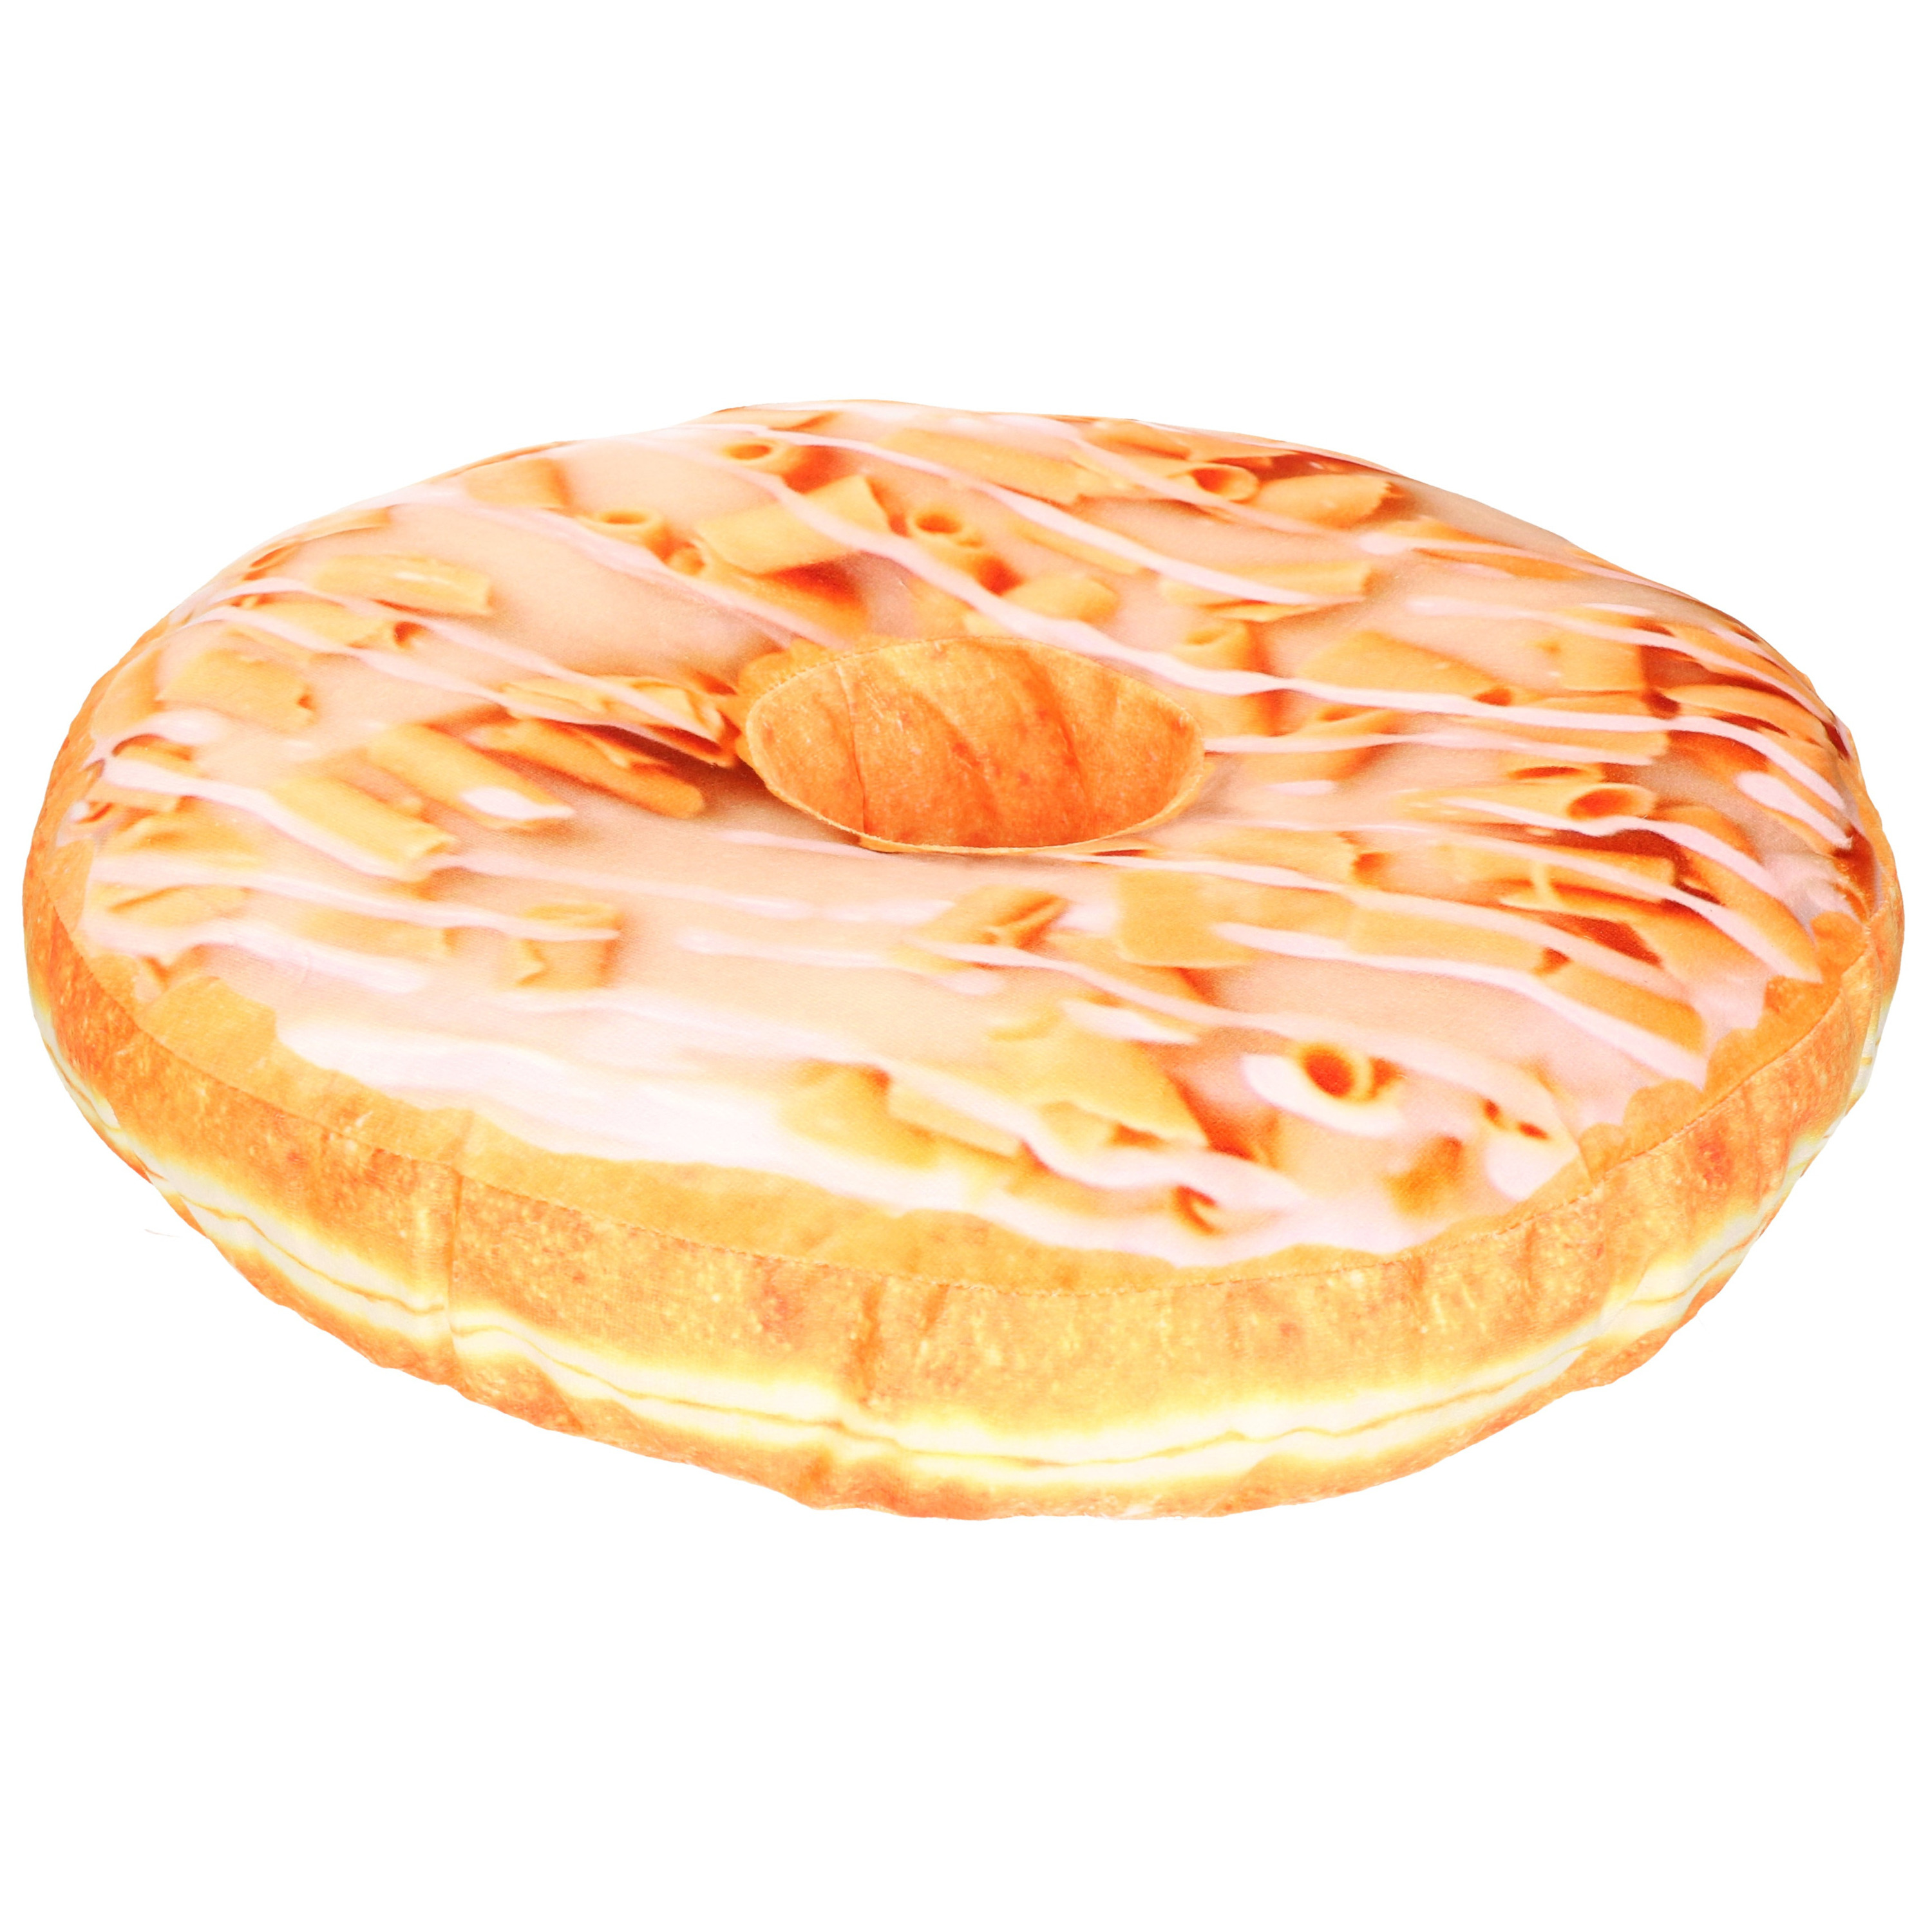 Donut sierkussen oranje met glazuur en witte cholocade sprinkels 40 cm